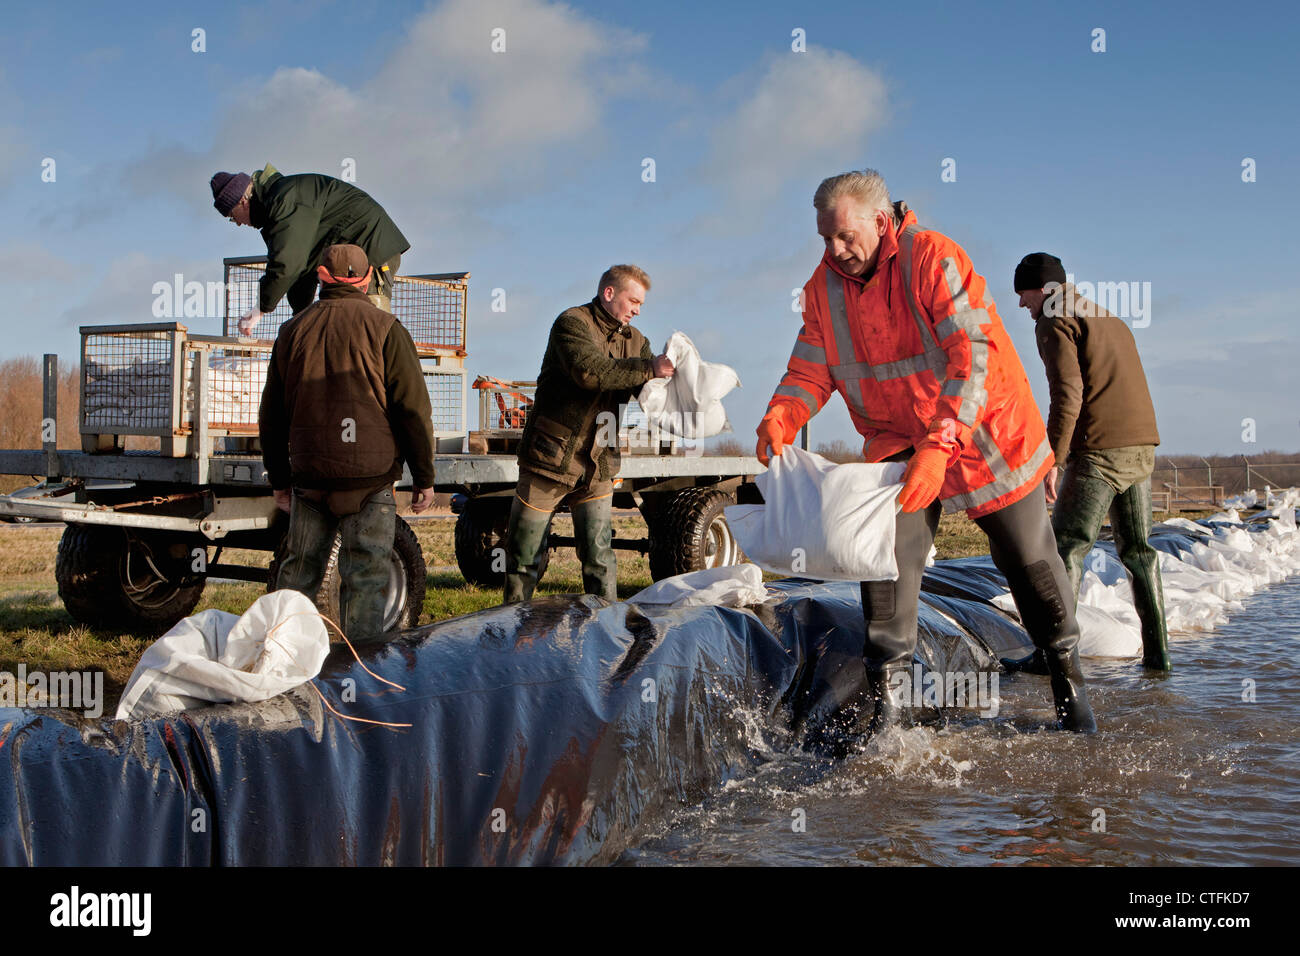 The Netherlands, Lauwersoog, protecting land with sandbags against flooding. Stock Photo